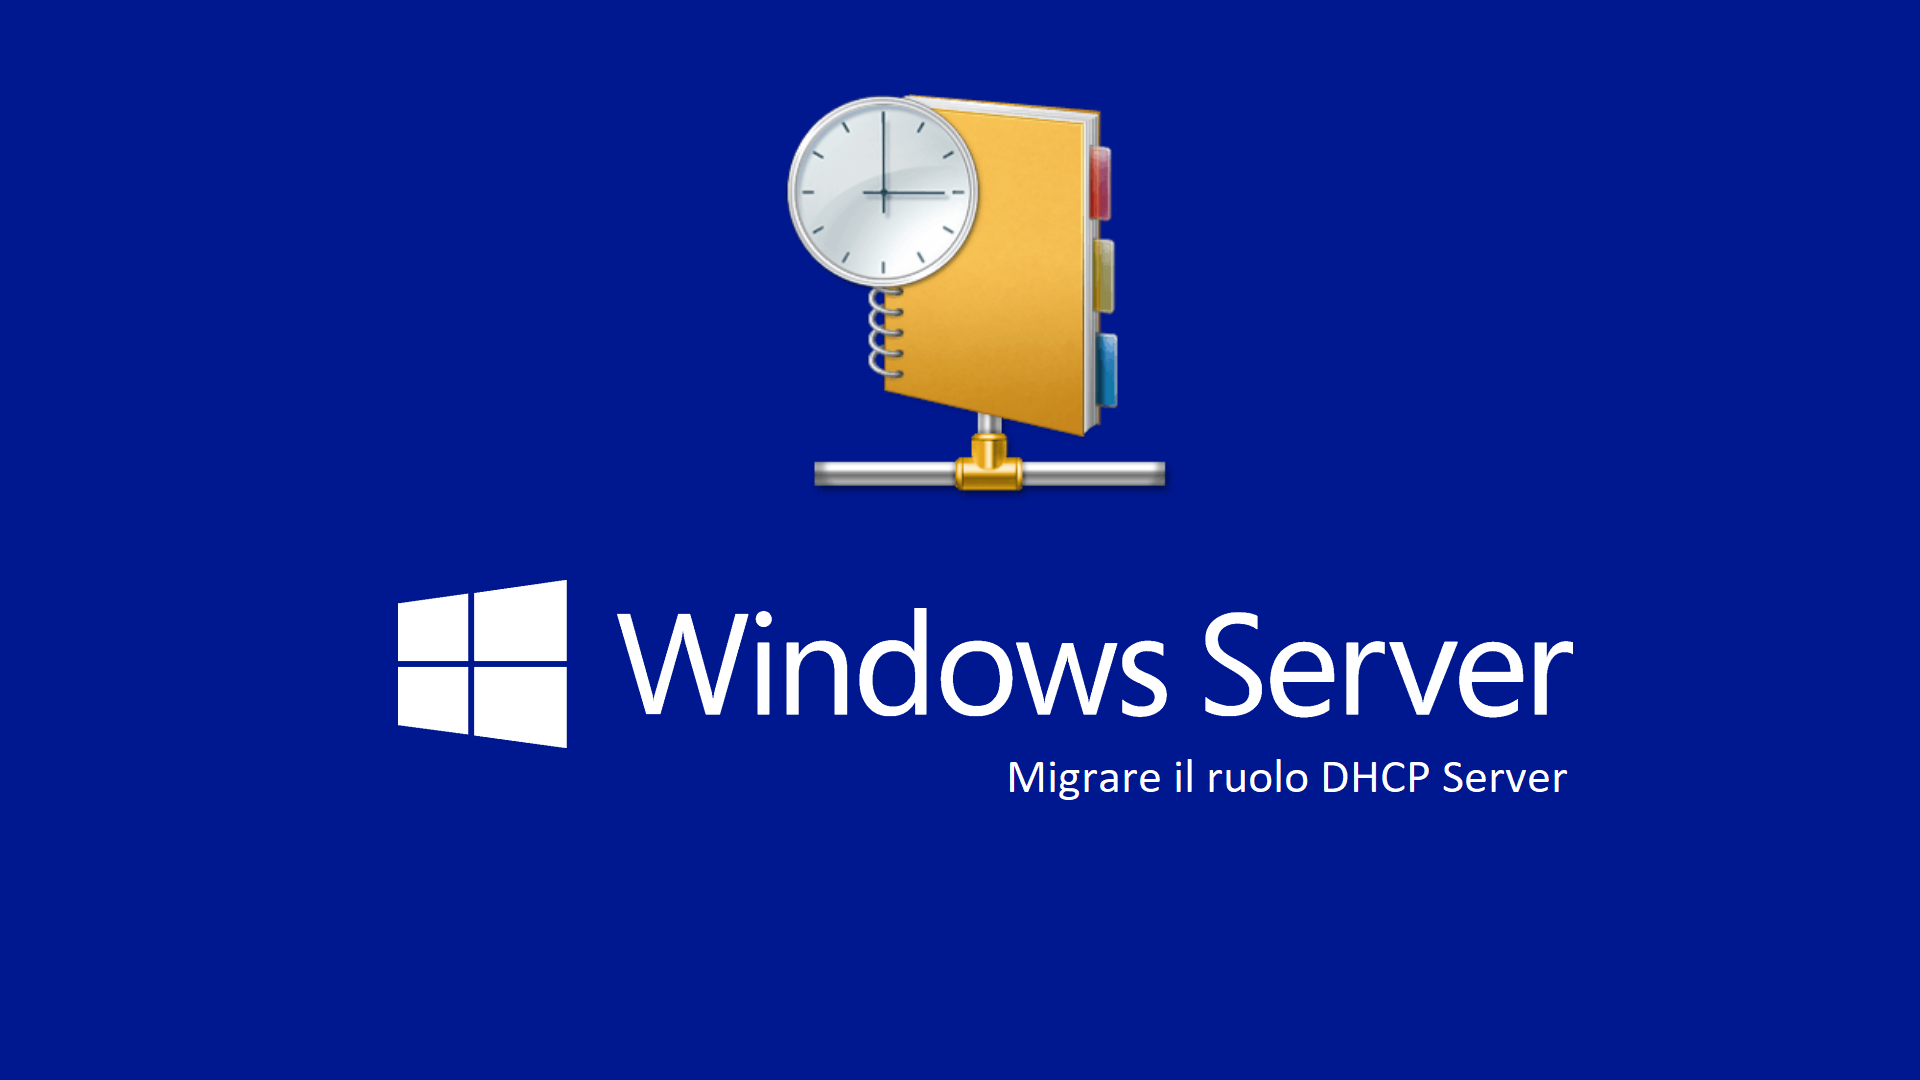 Server dumps. Загрузка виндовс 10. Логотип Windows 10. Запуск виндовс. Запуск Windows 10.